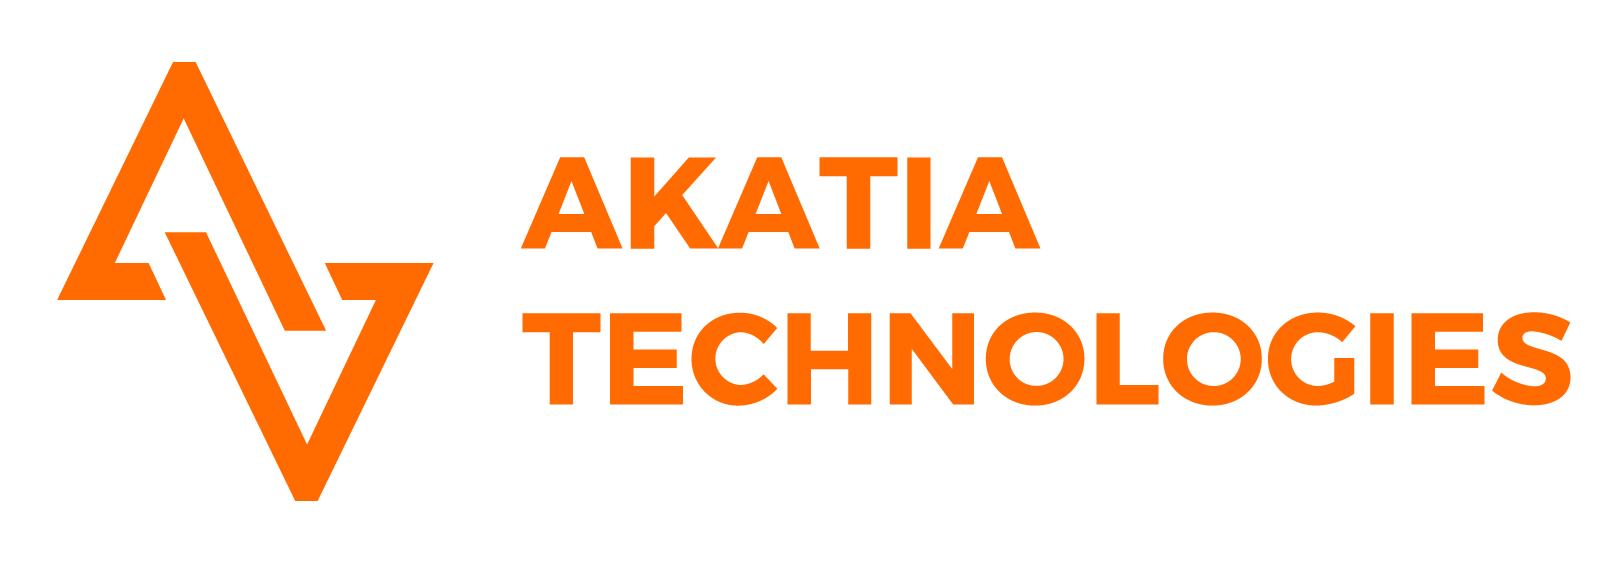 Akatia_Technologies_Logo_FullColor